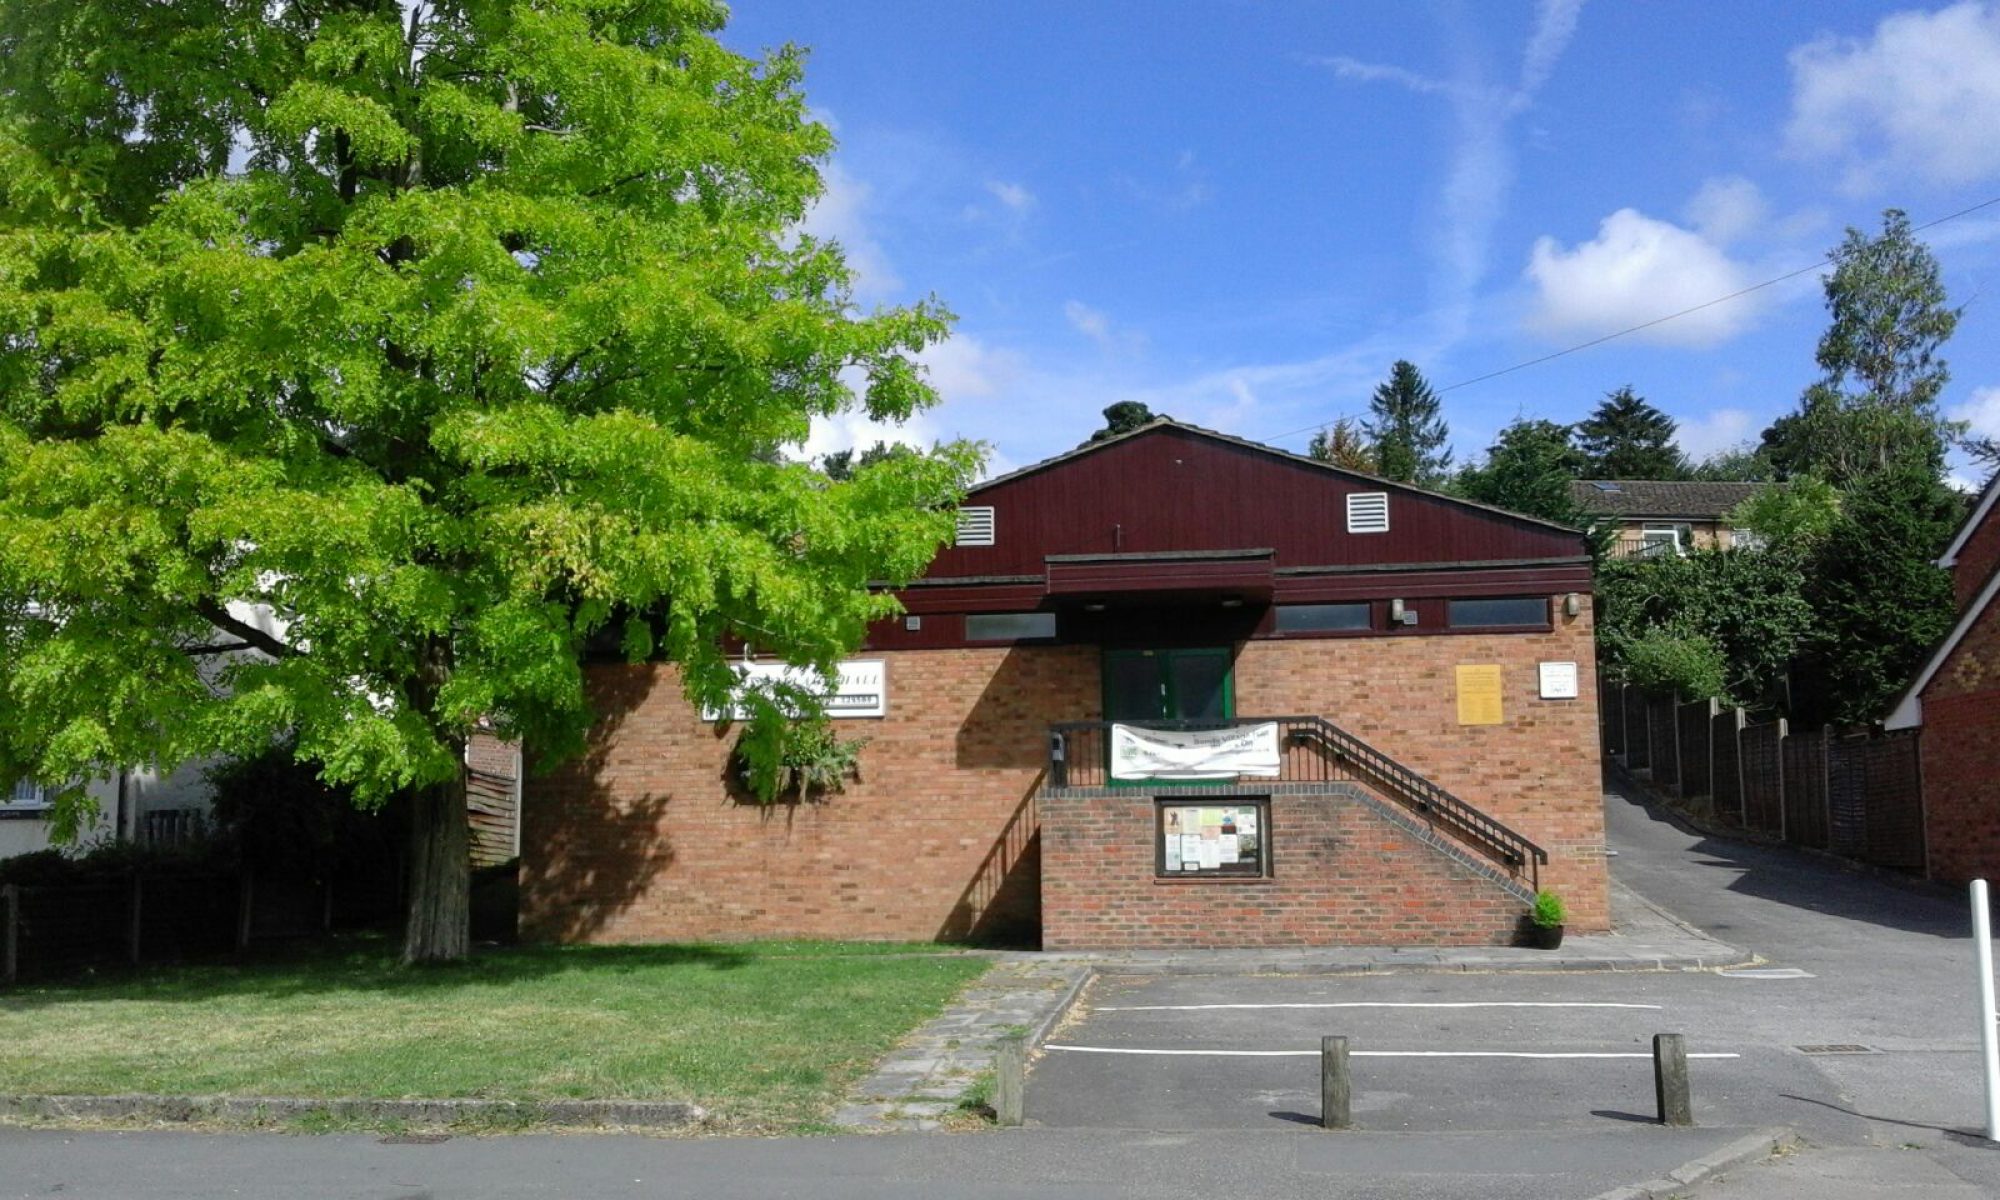 Sands Village Hall, High Wycombe